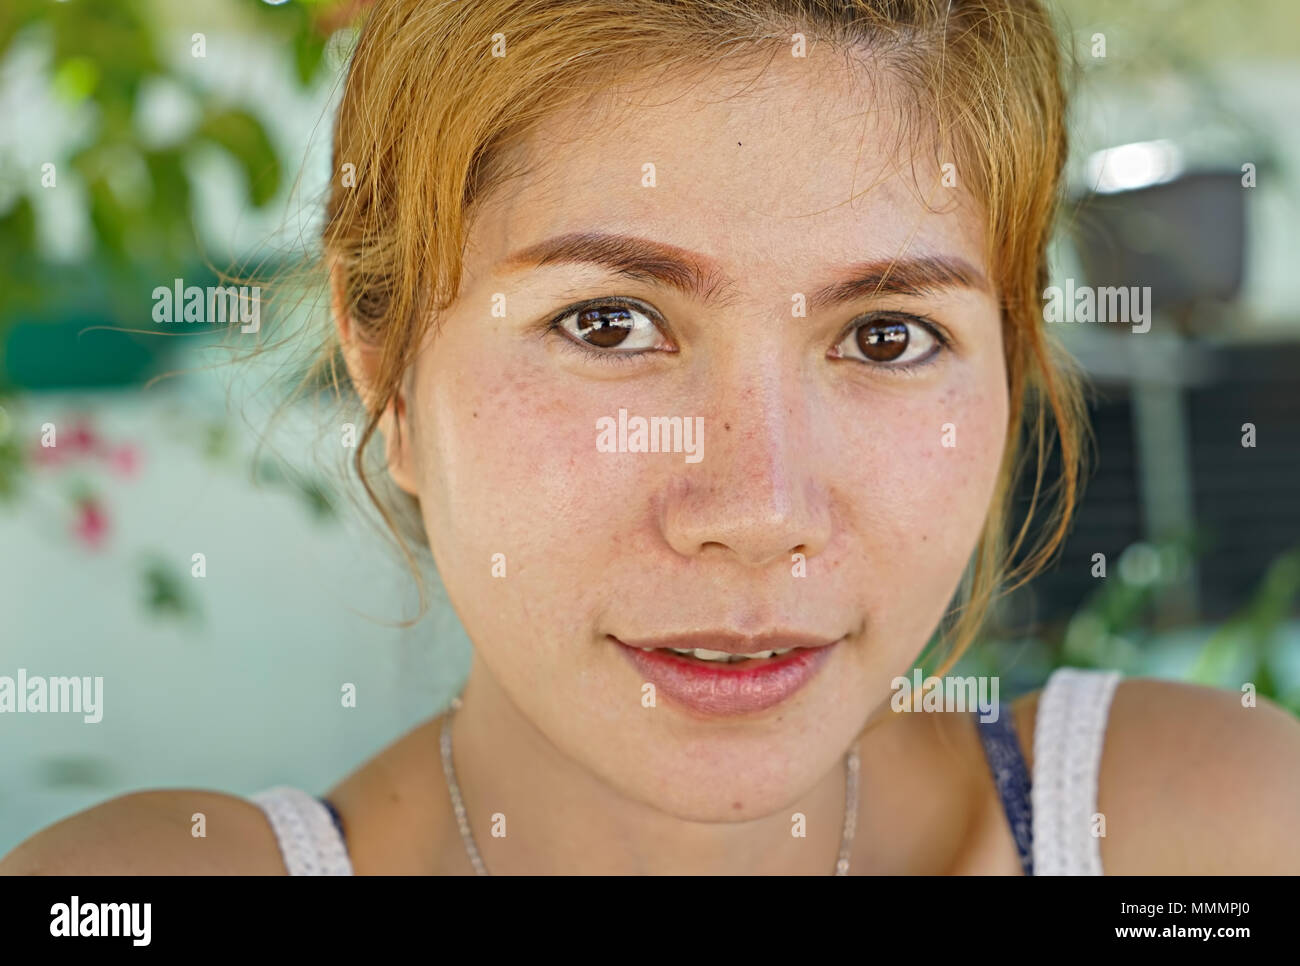 Beautiful Asian girl in background Stock Photo